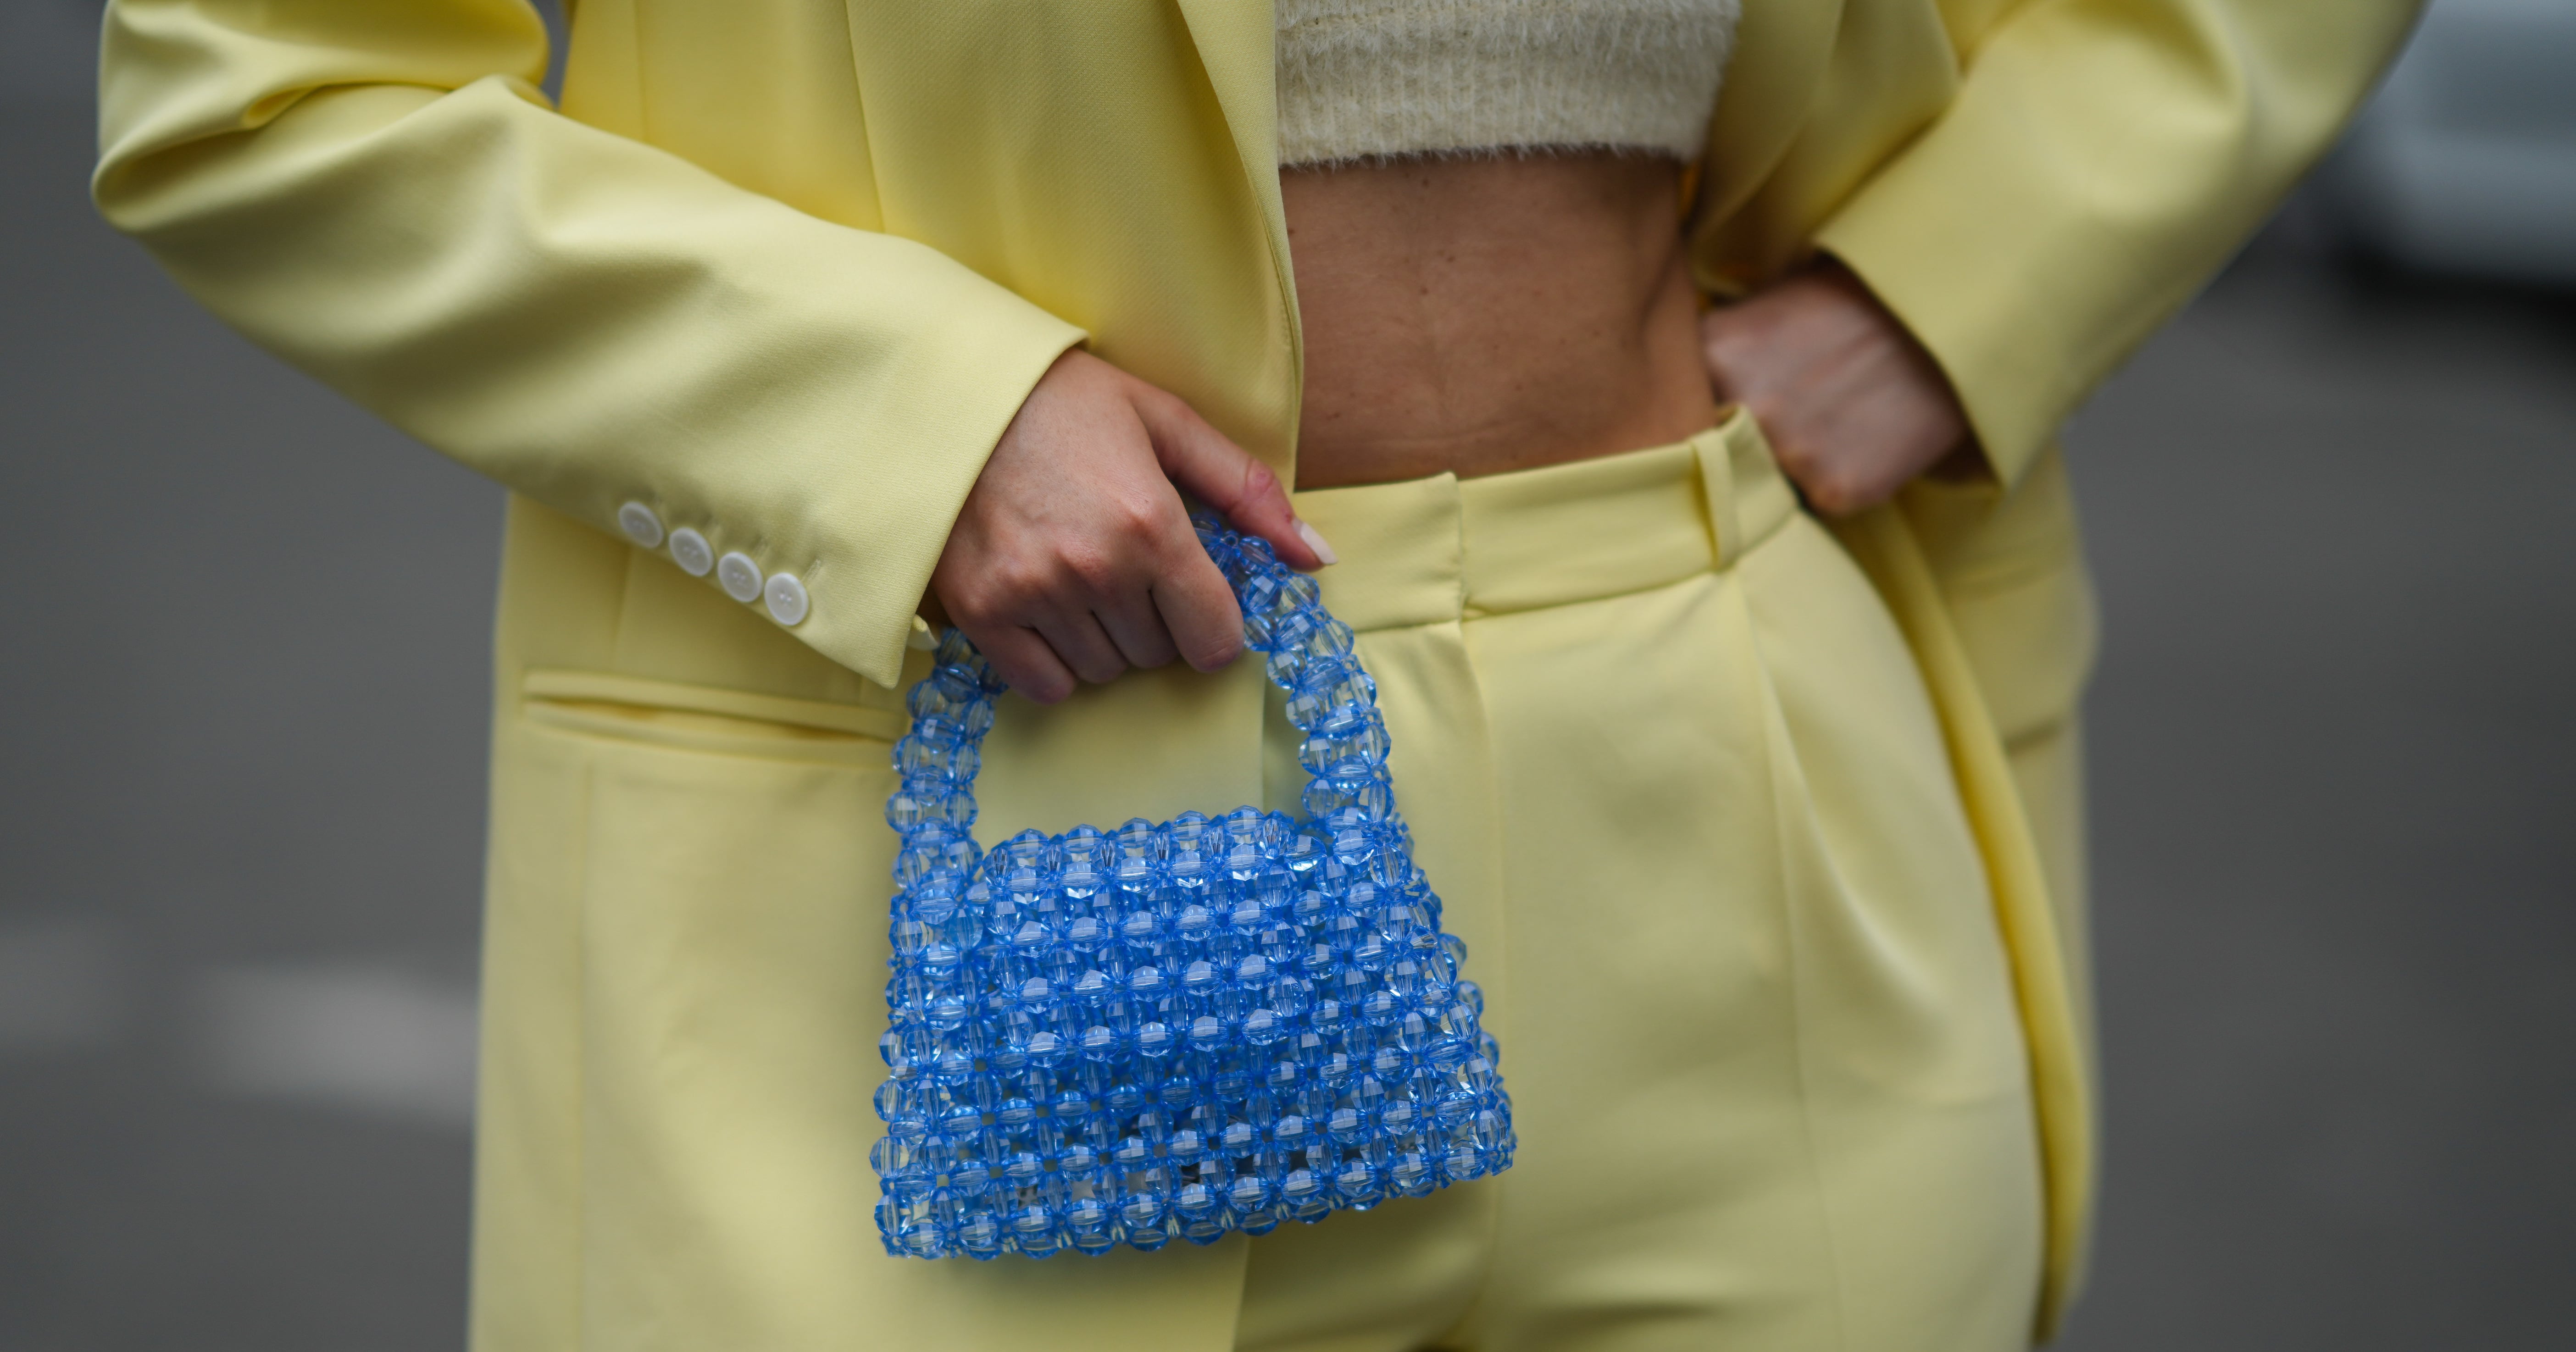 Best Bags on Amazon Fashion Under $100